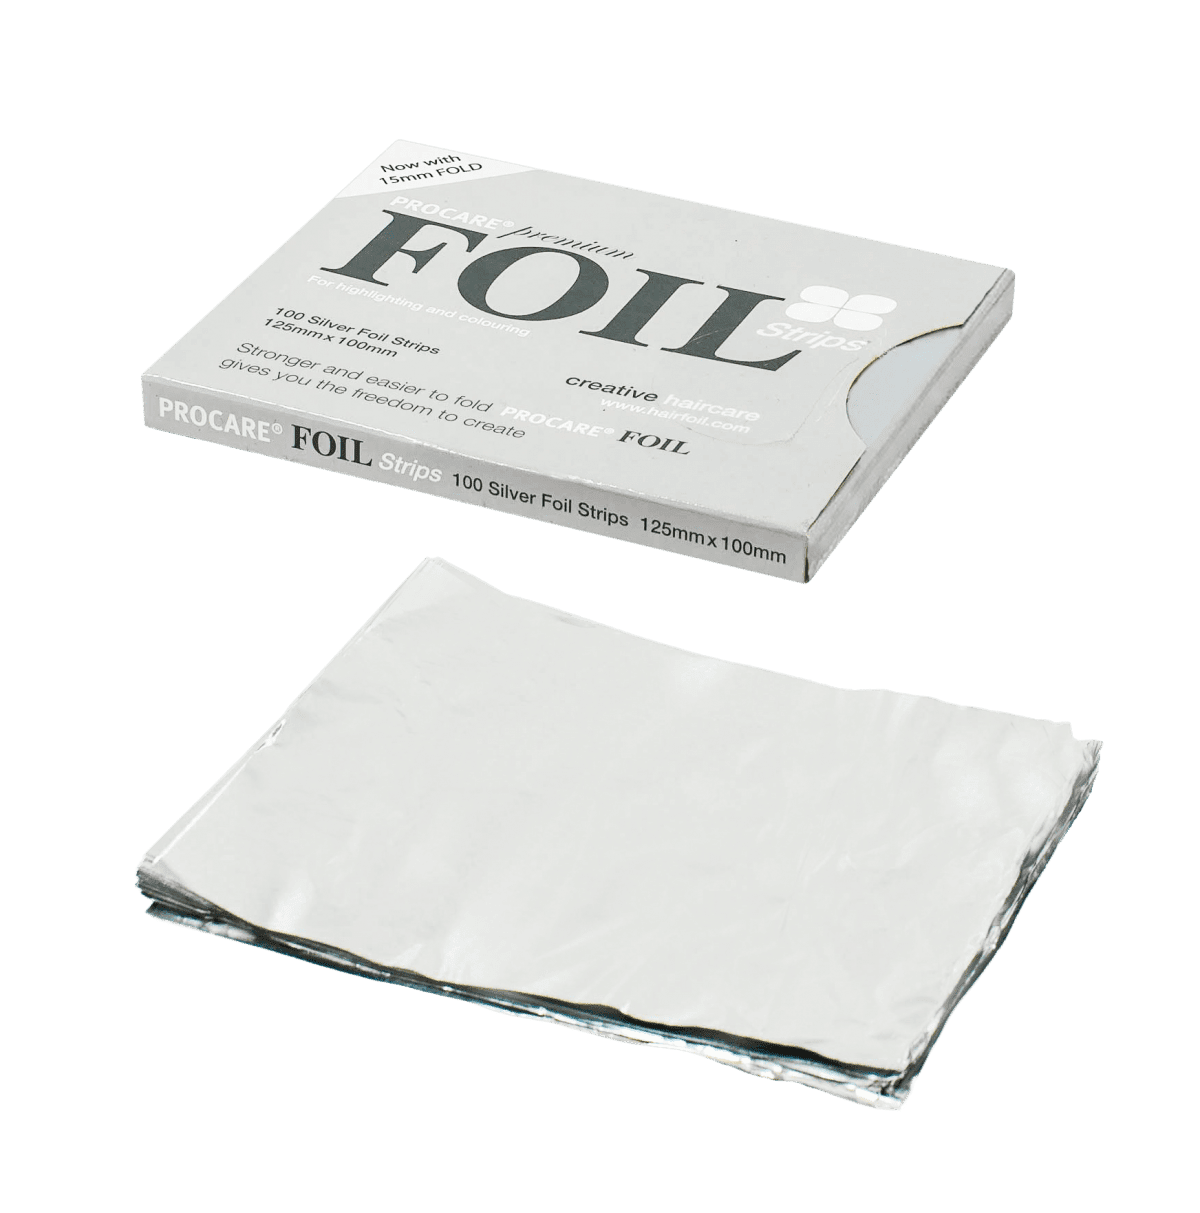 Procare foil strips 125mm x 100mm